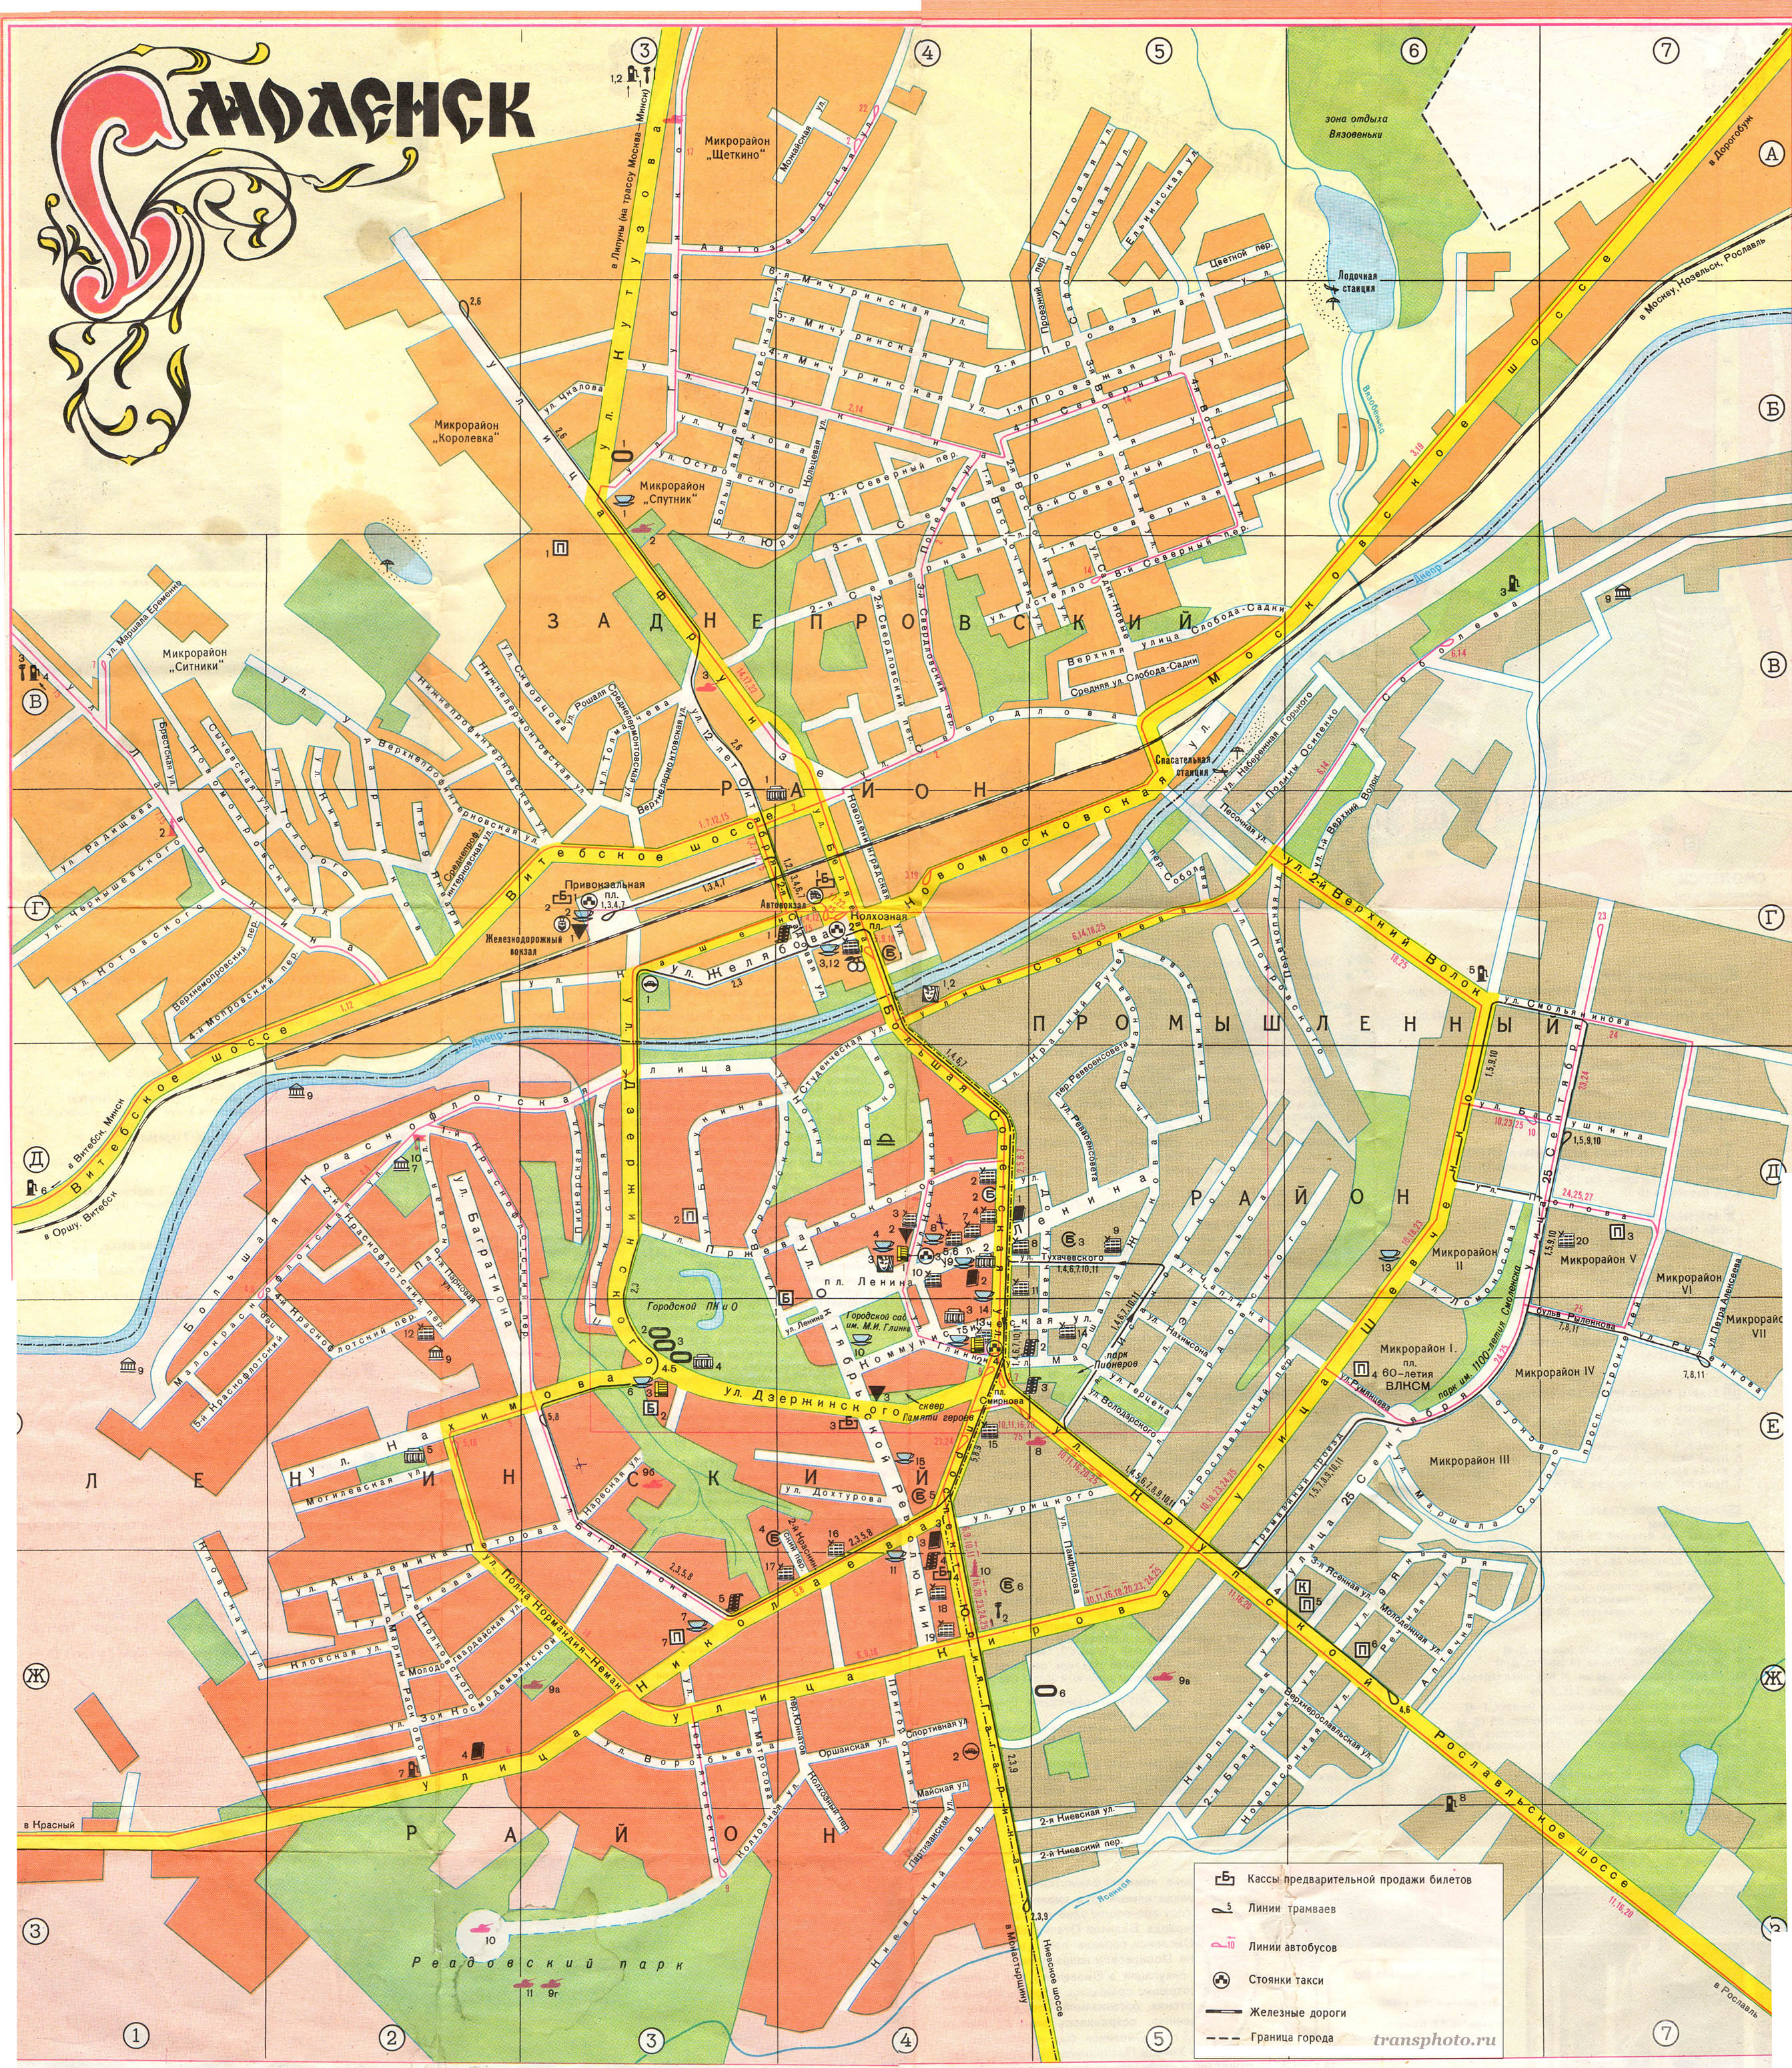 Smolensk — Maps